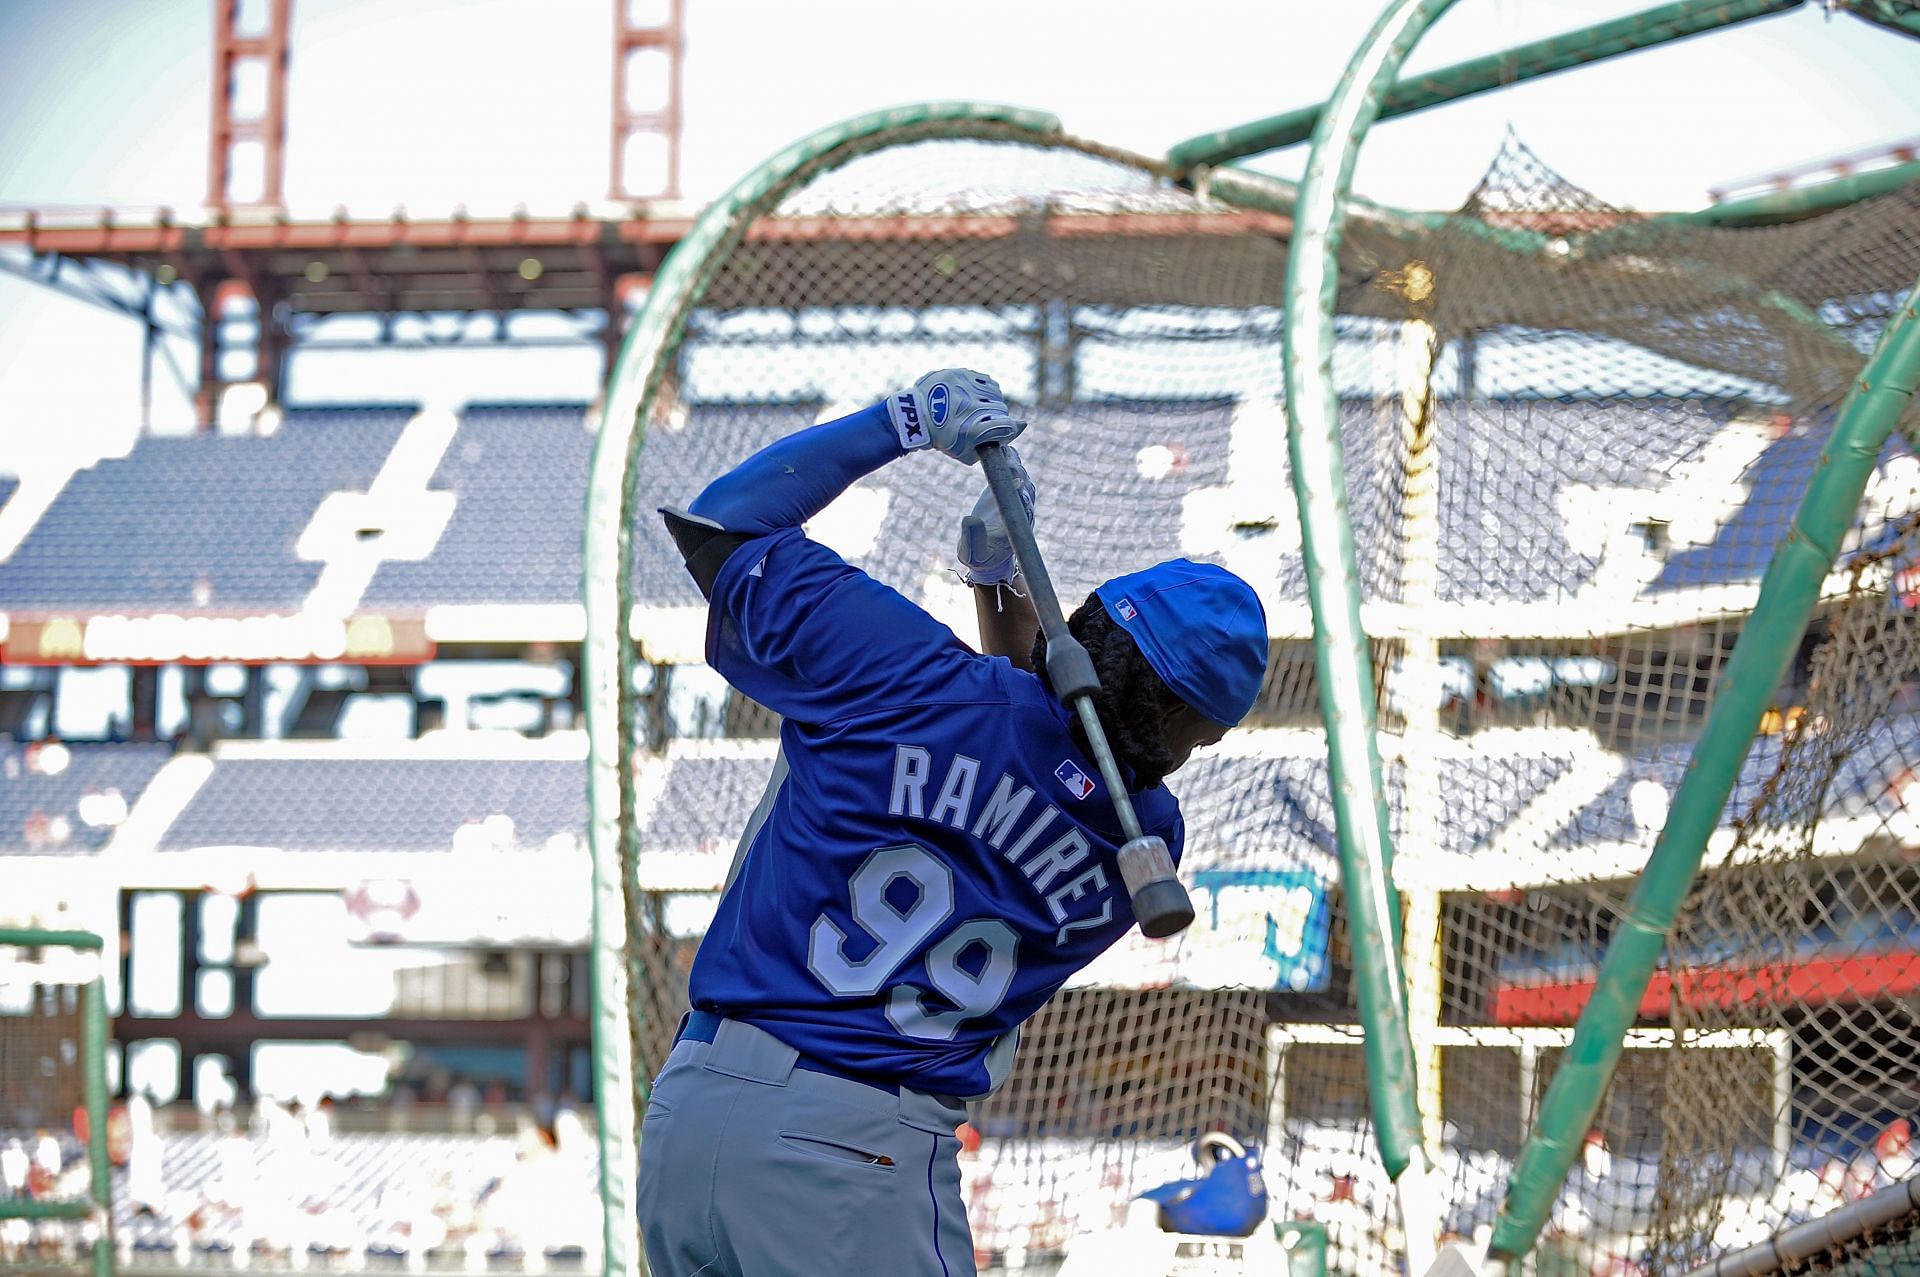 Manny Ramirez one-handed home run